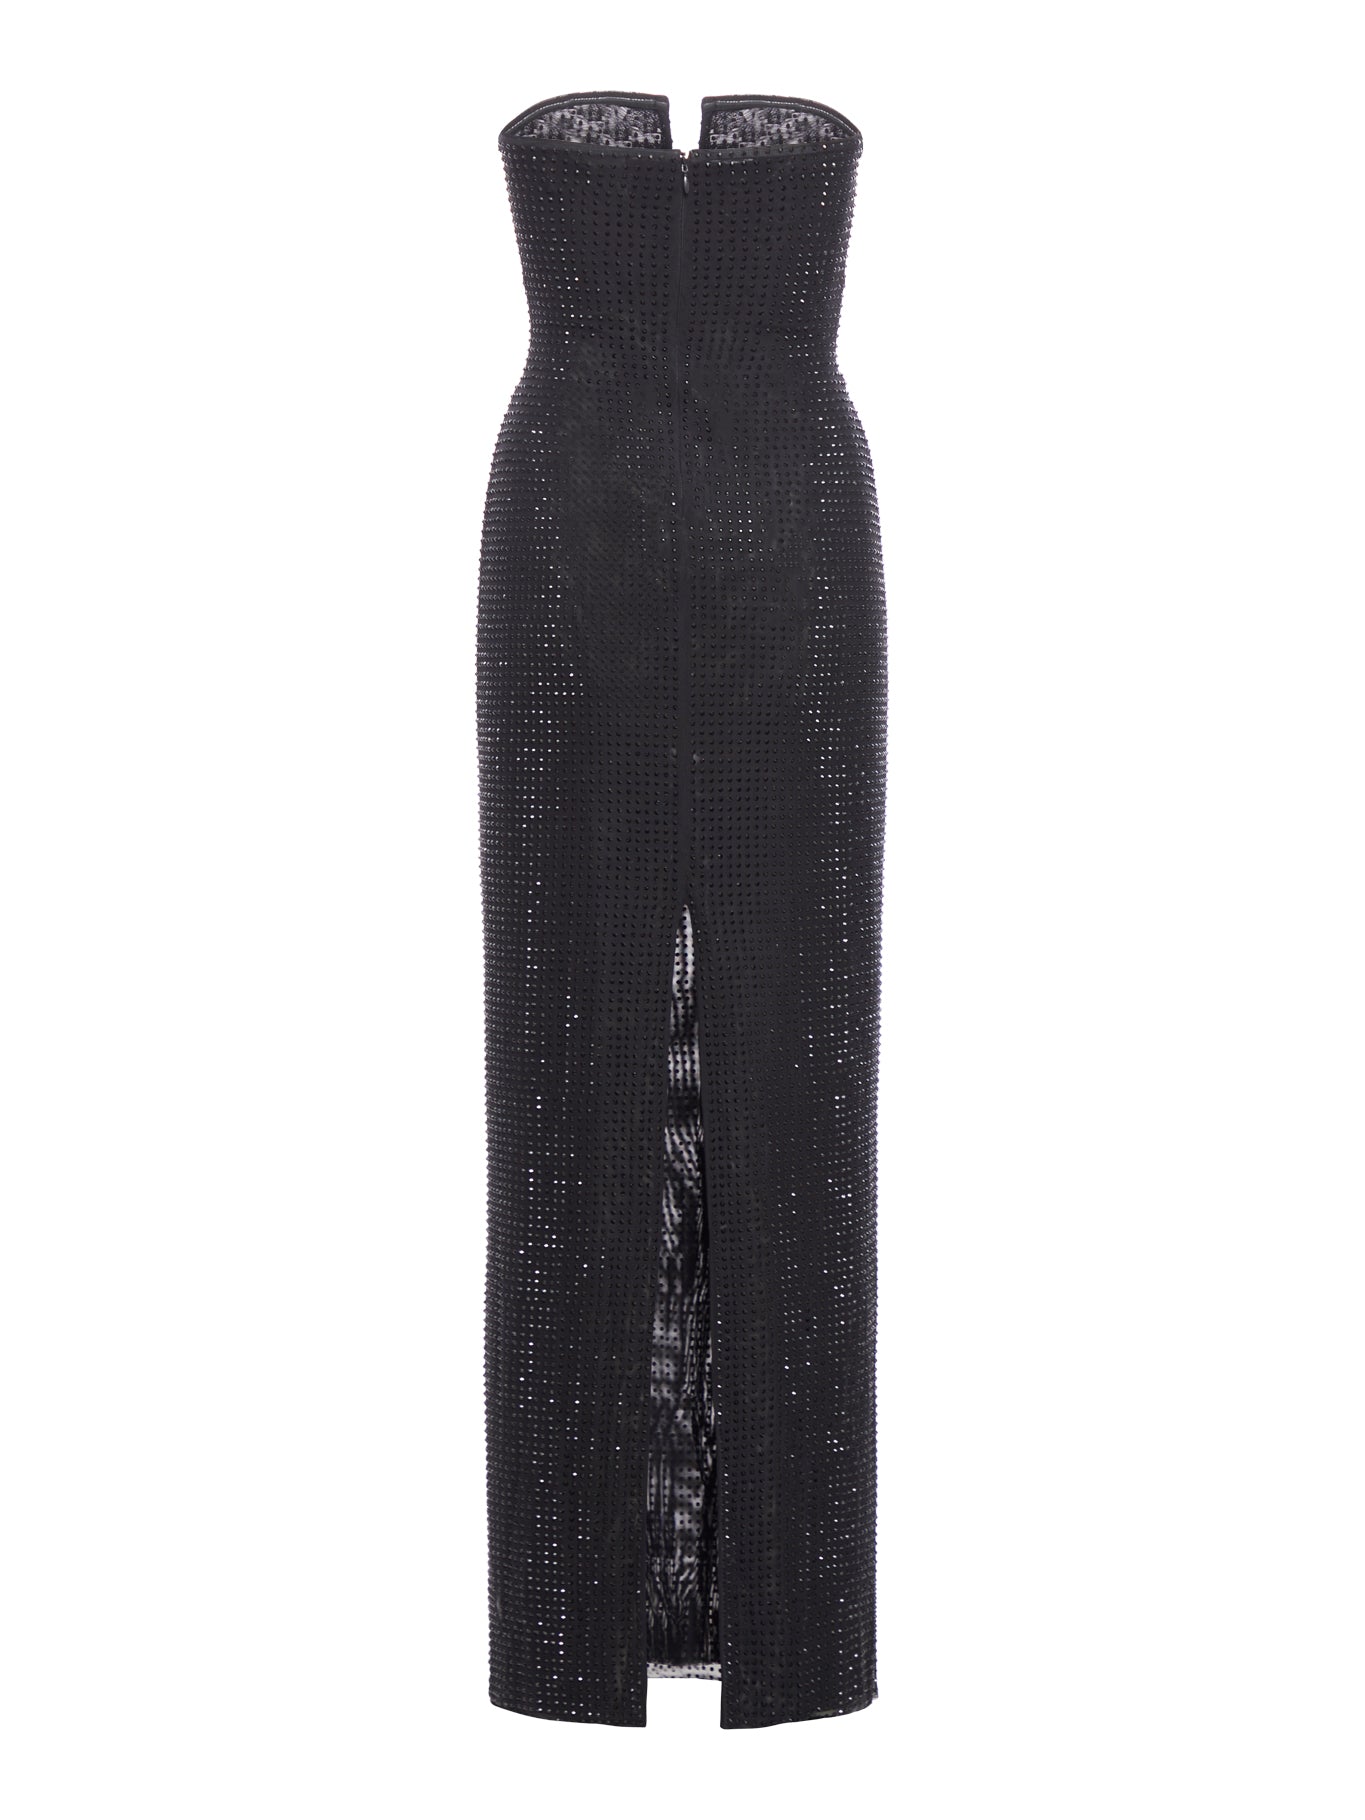 black mesh dress with rhinestones